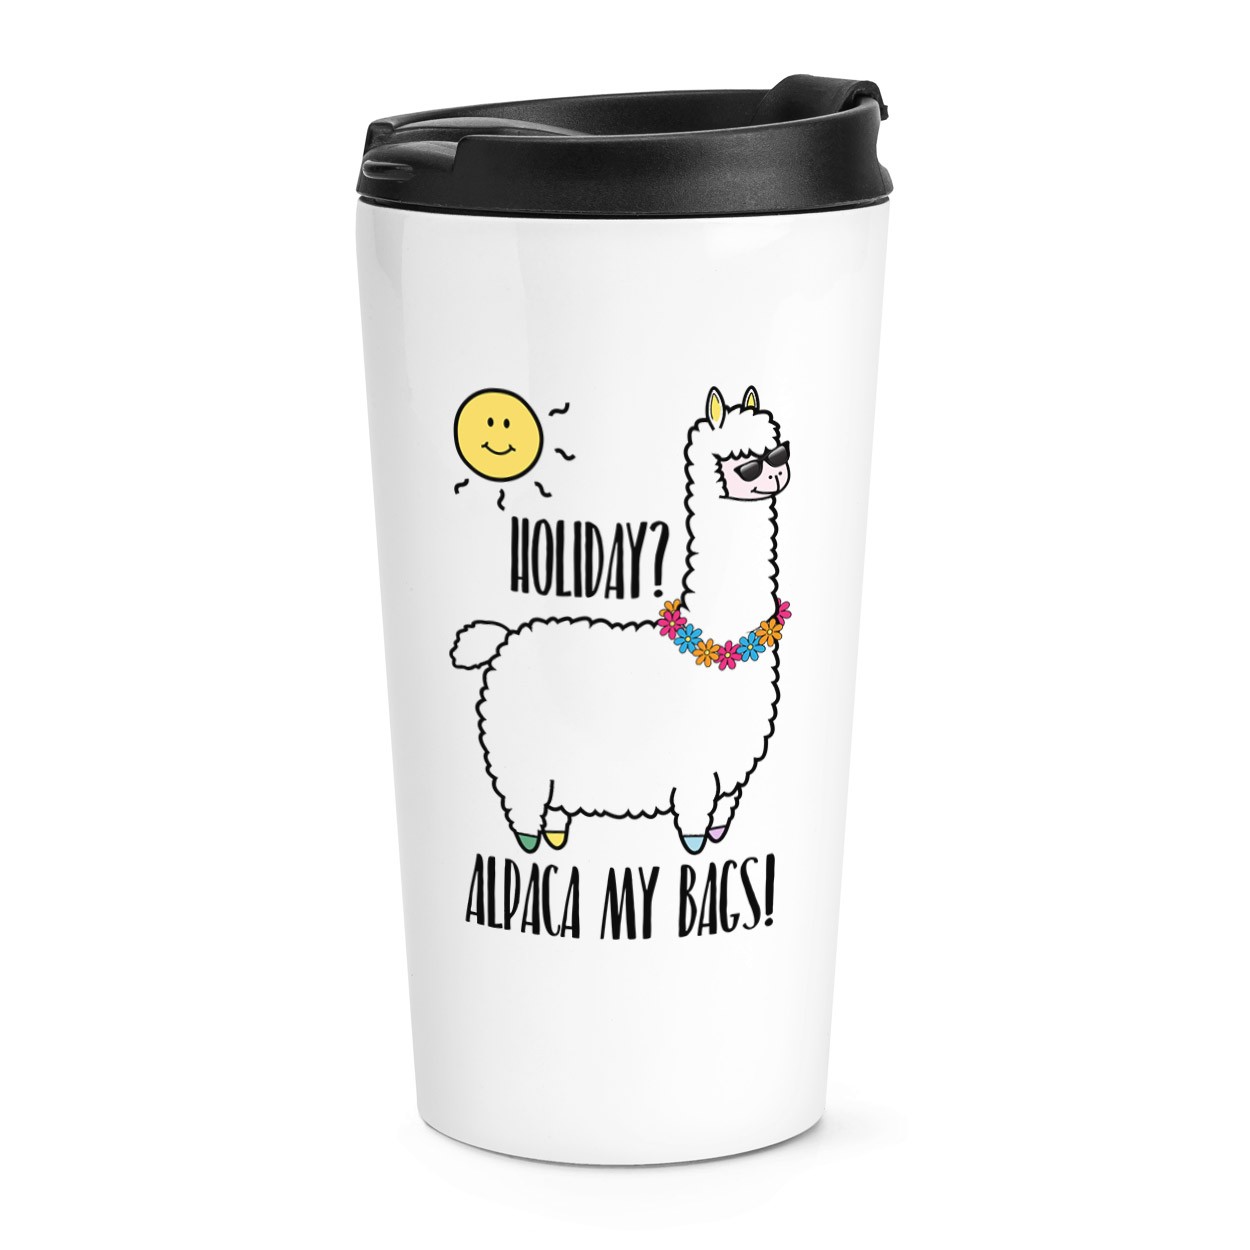 Holiday Alpaca My Bags Travel Mug Cup